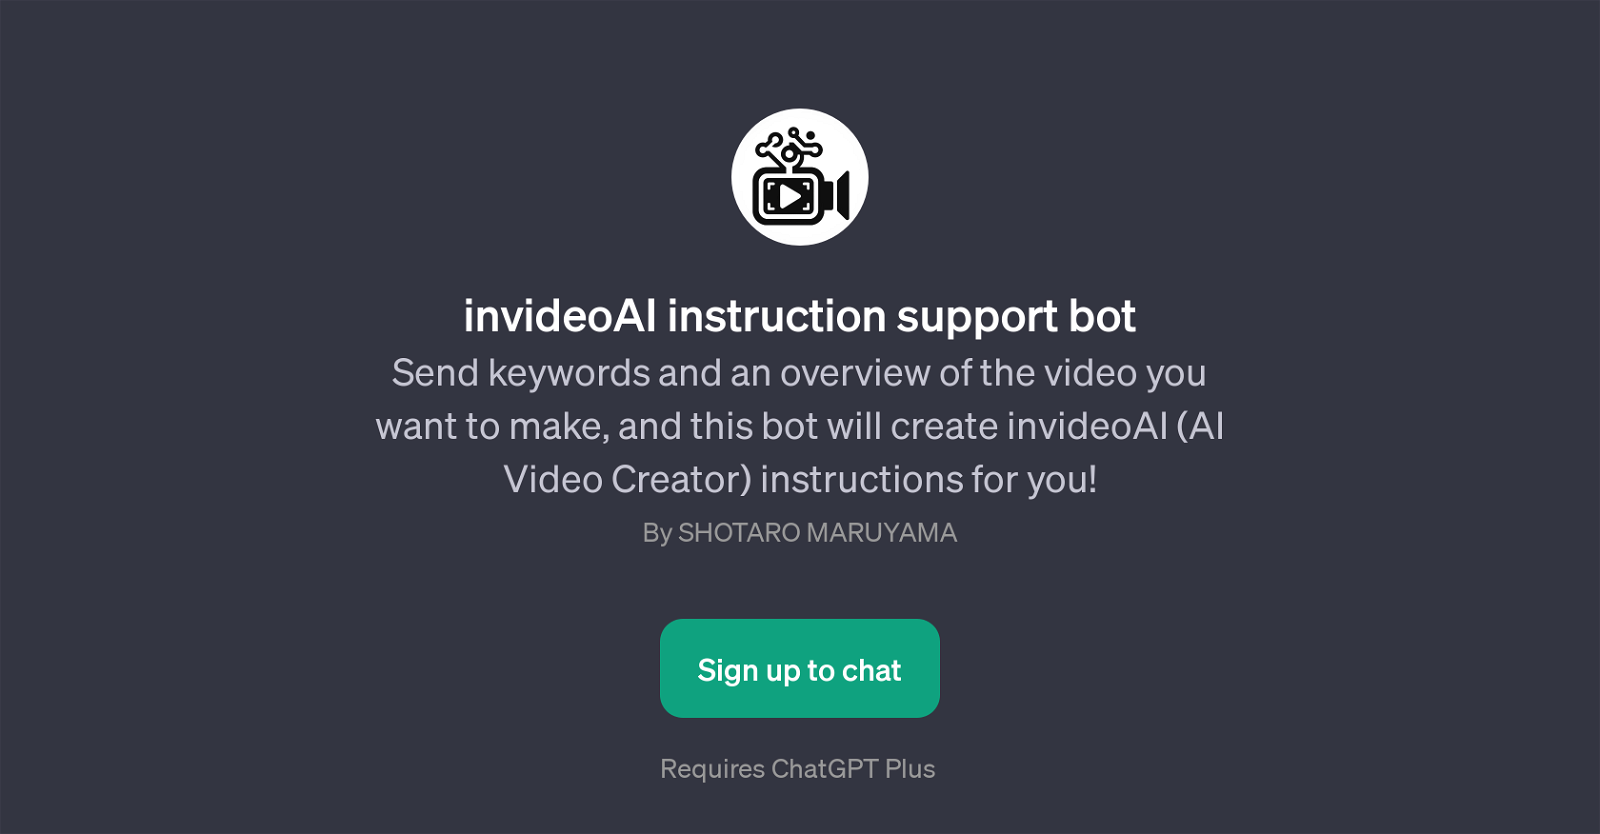 invideoAI instruction support bot website